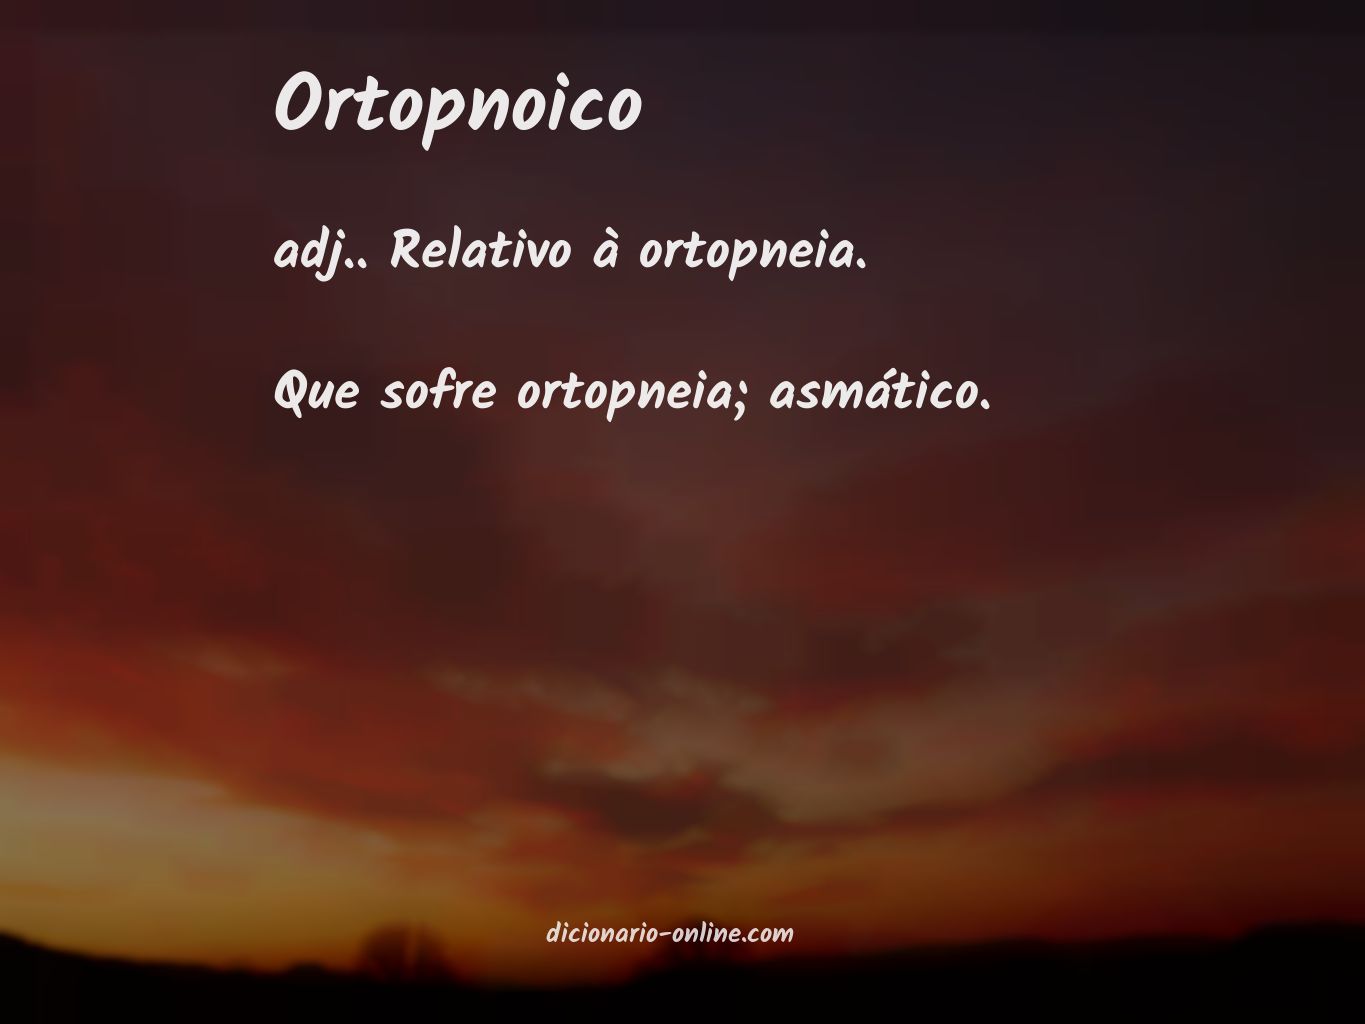 Significado de ortopnoico